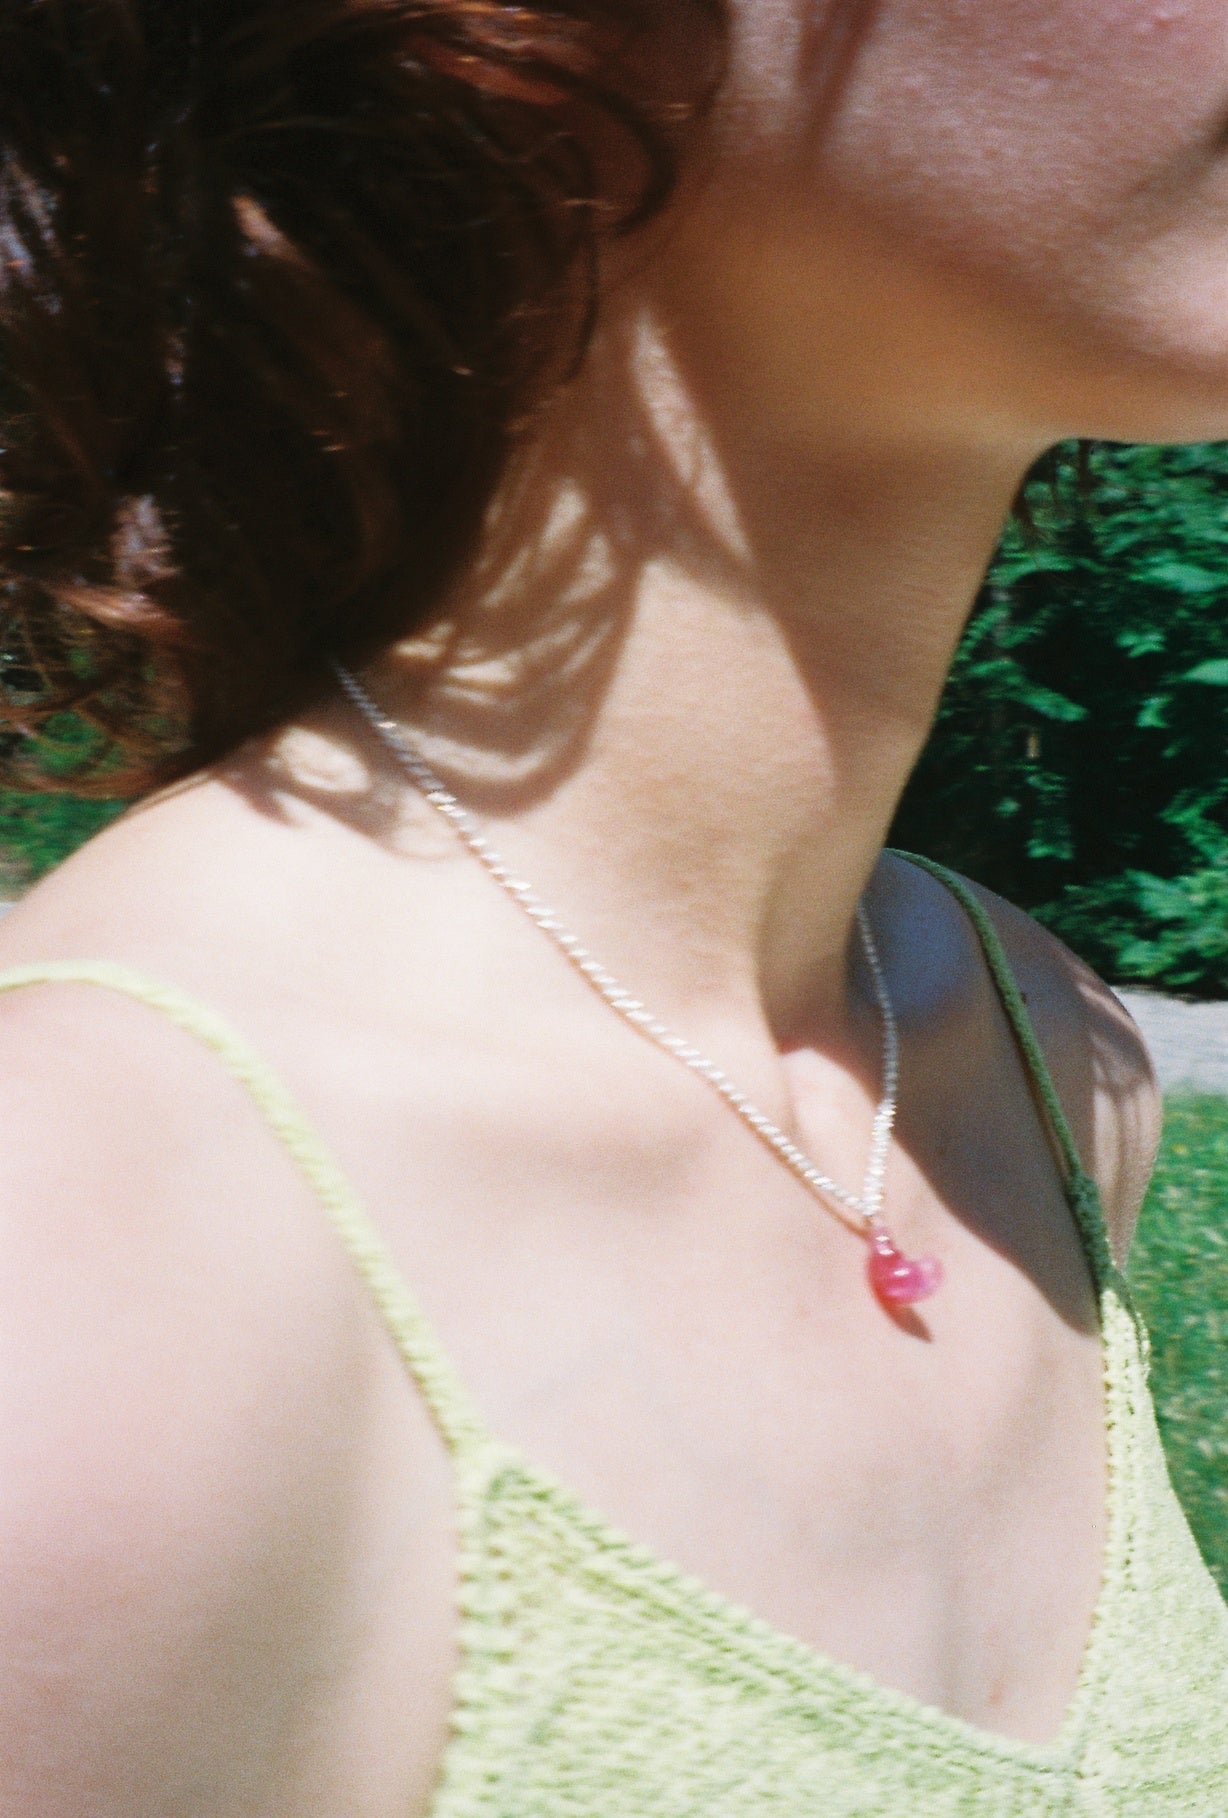 Malakio necklace - Fuchsia